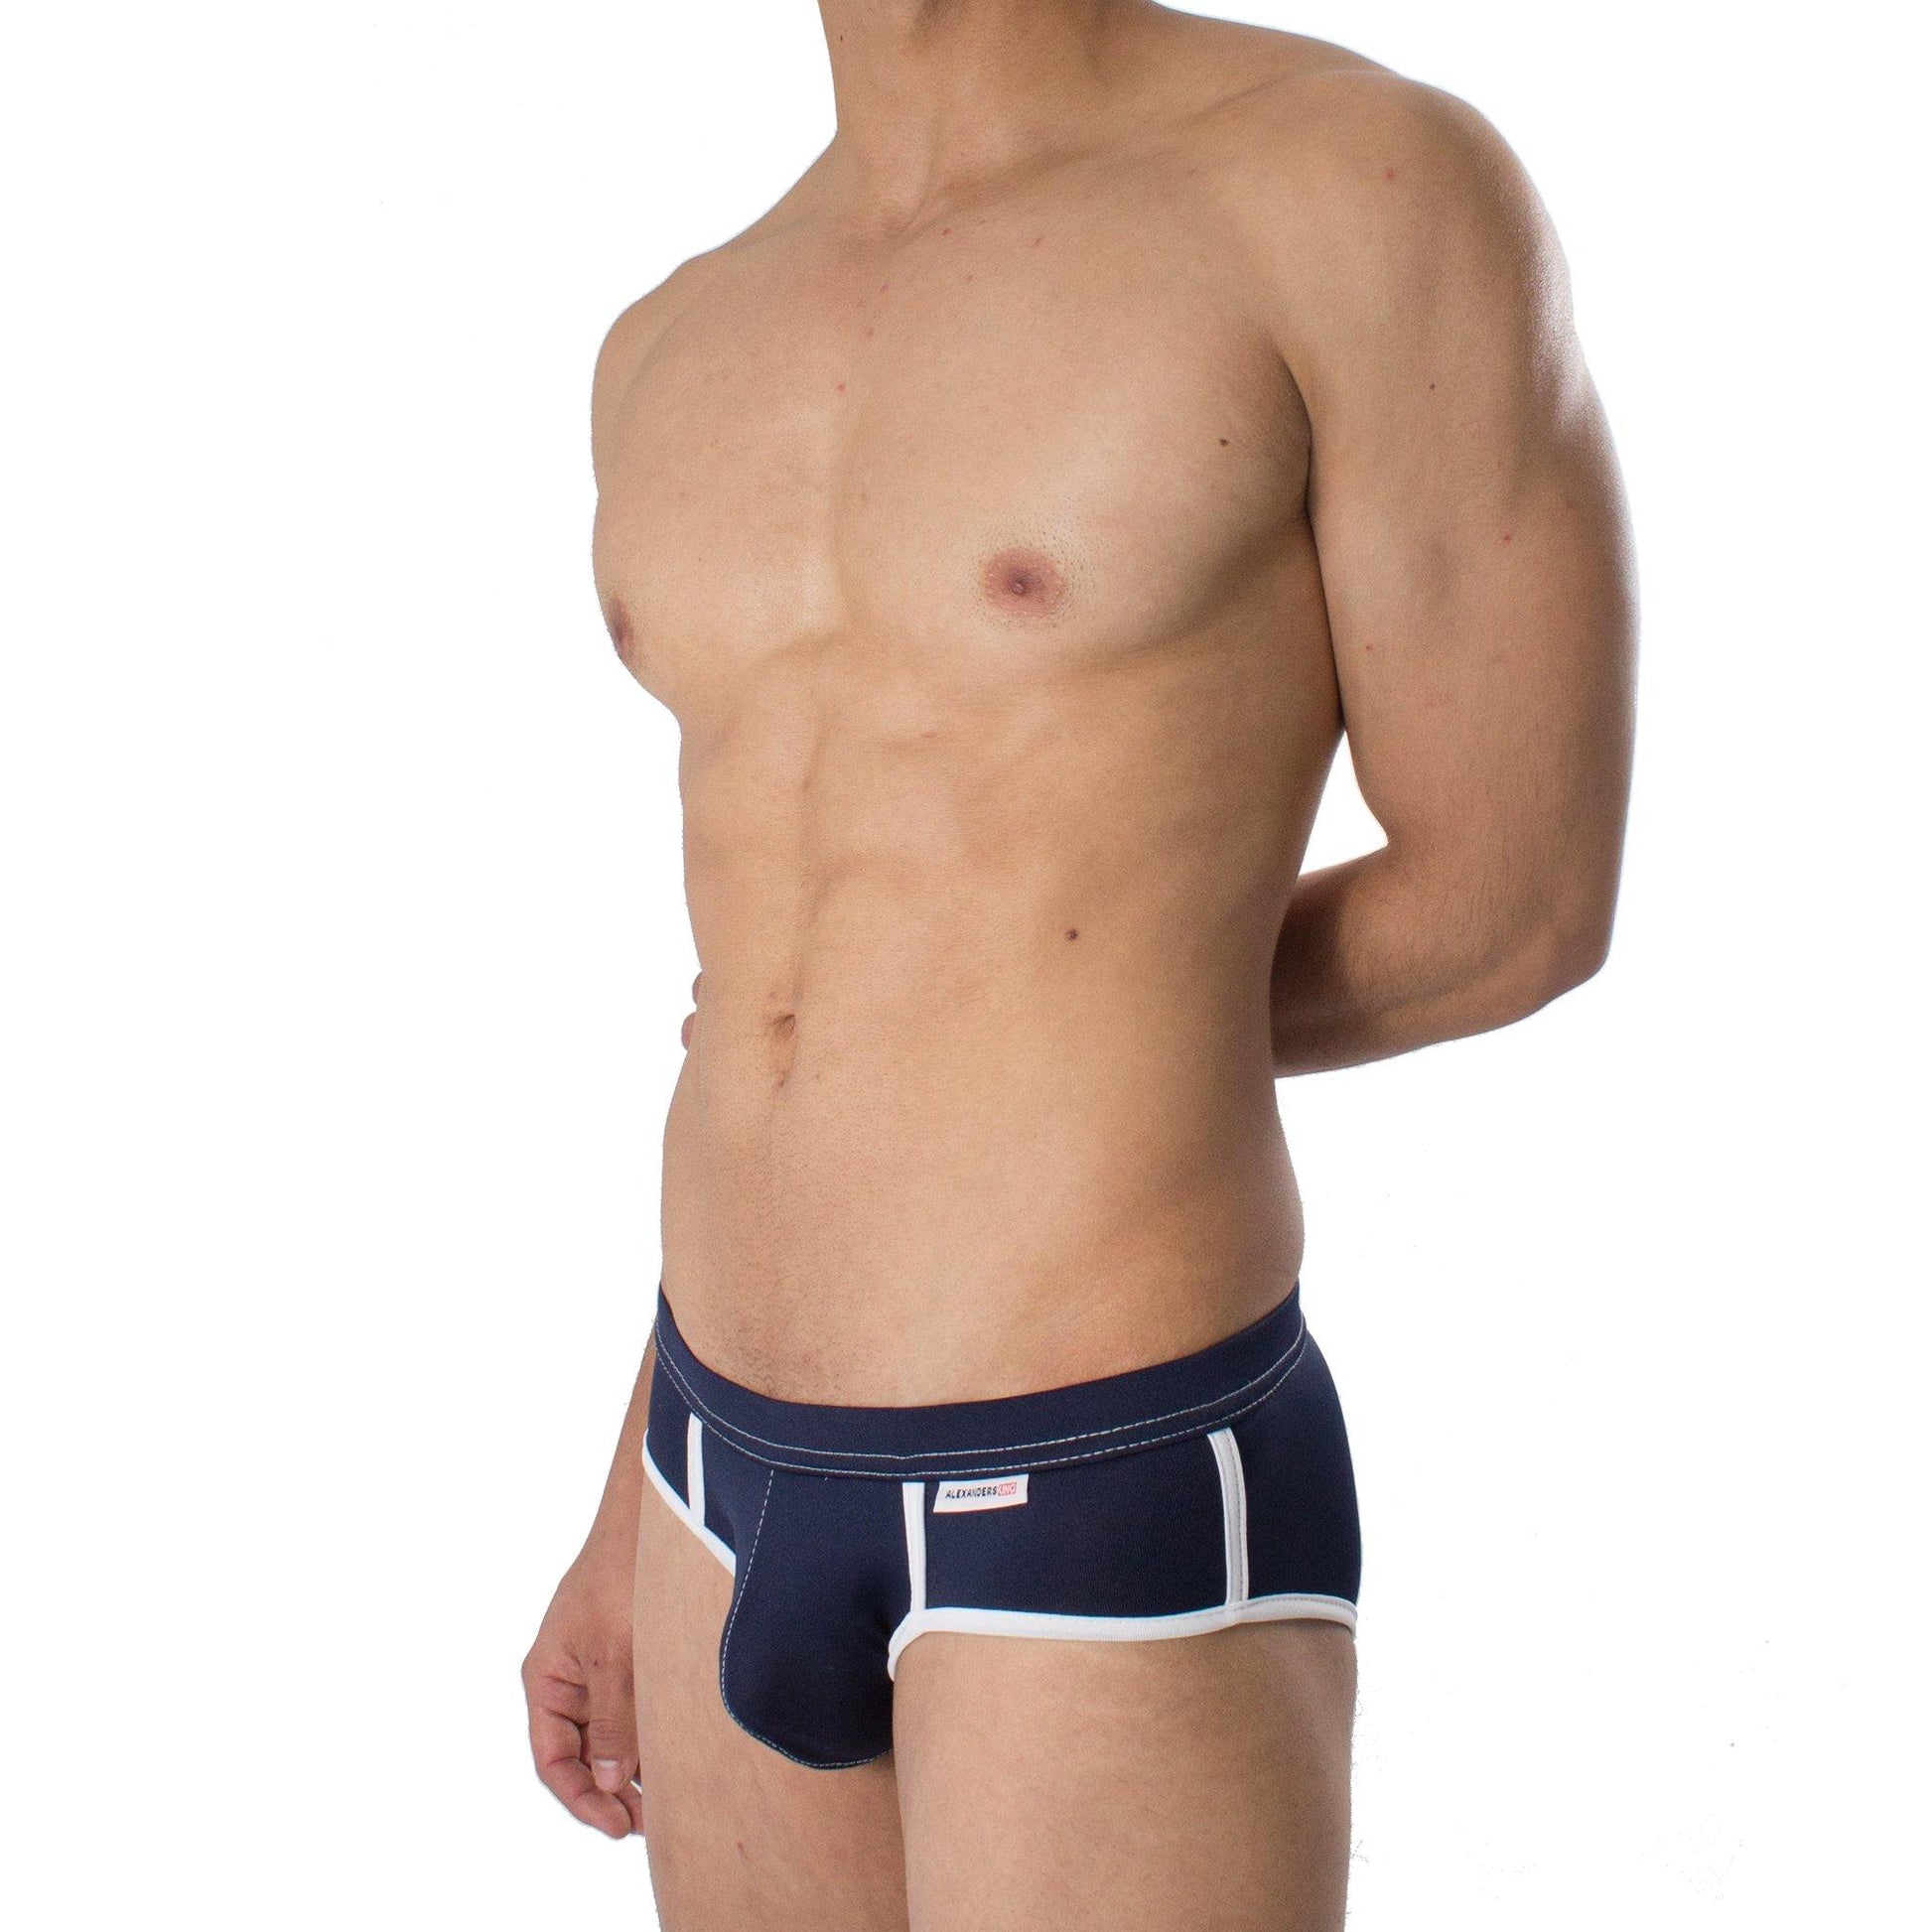 PB0003 - Brief Chroma Azul Marino Skinit - AlexandersKing Underwear